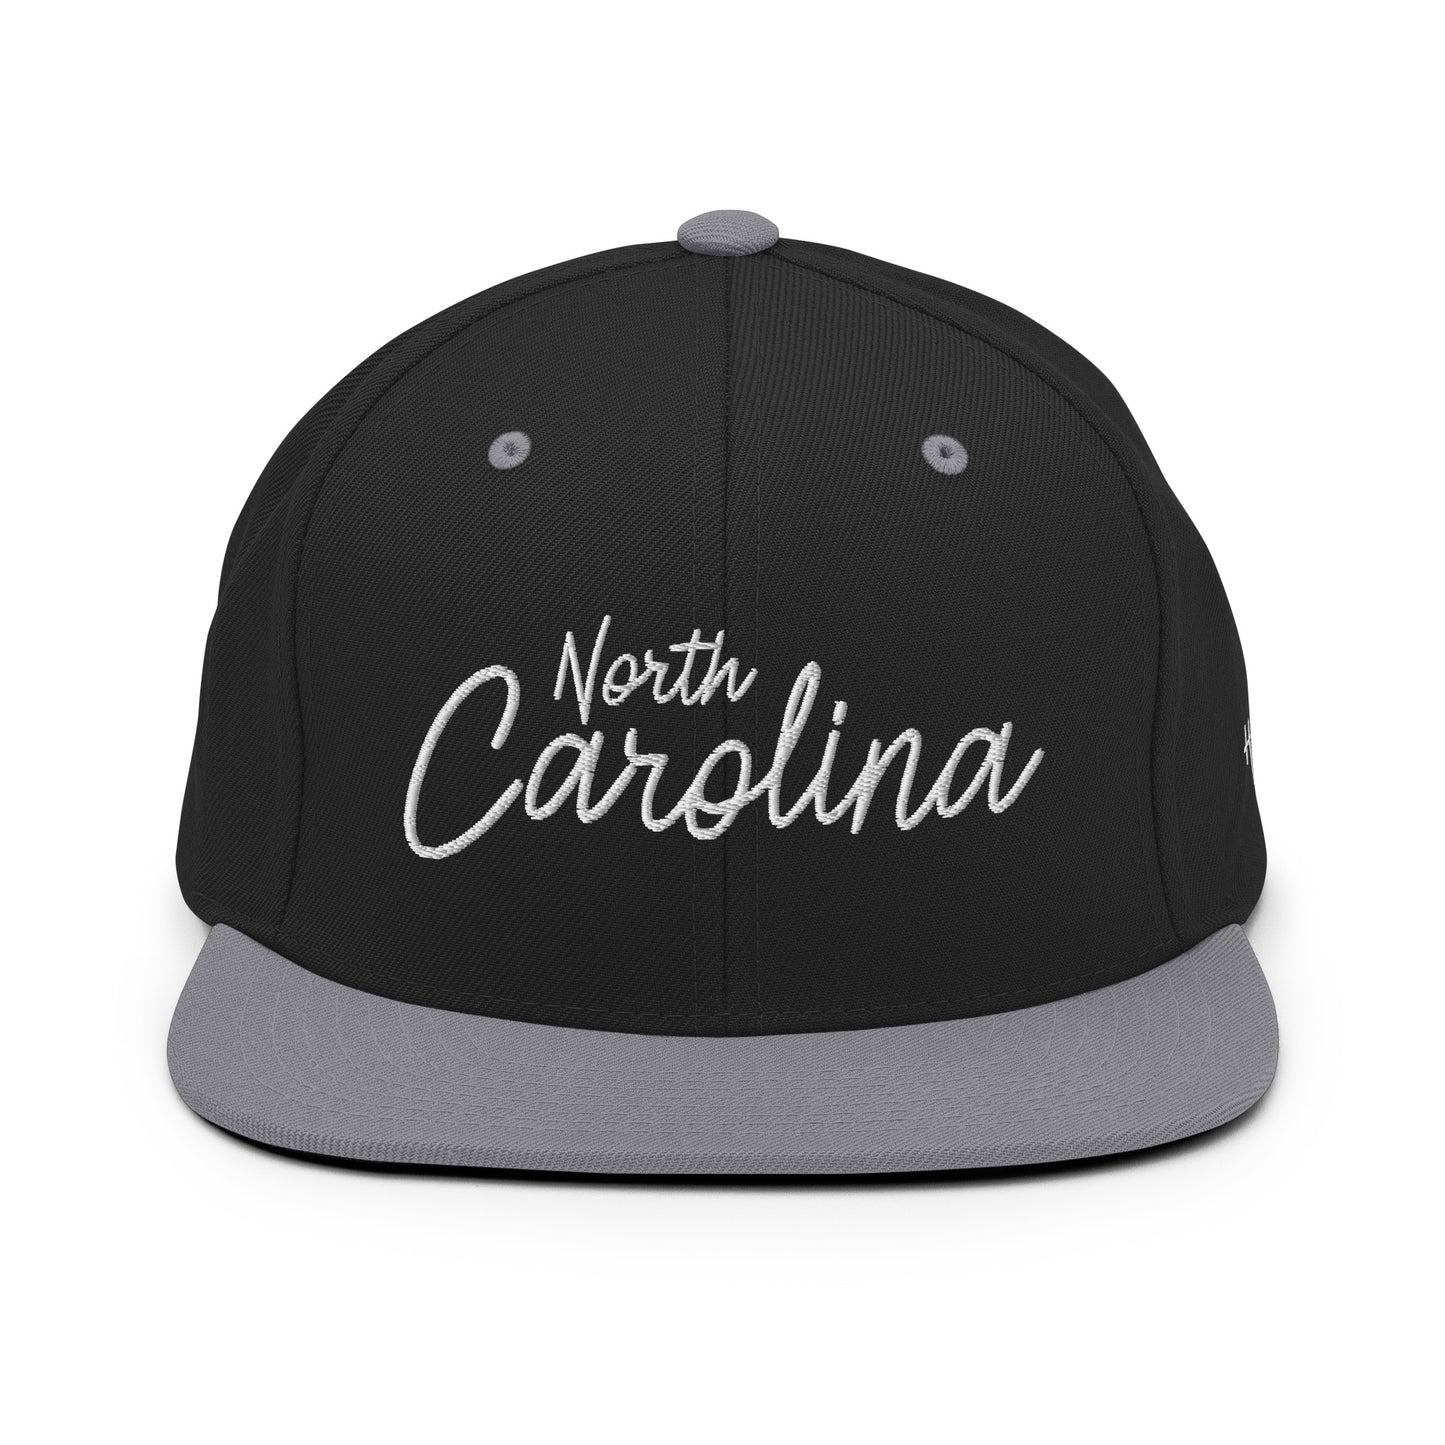 North Carolina Retro Script 6 Panel Snapback Hat